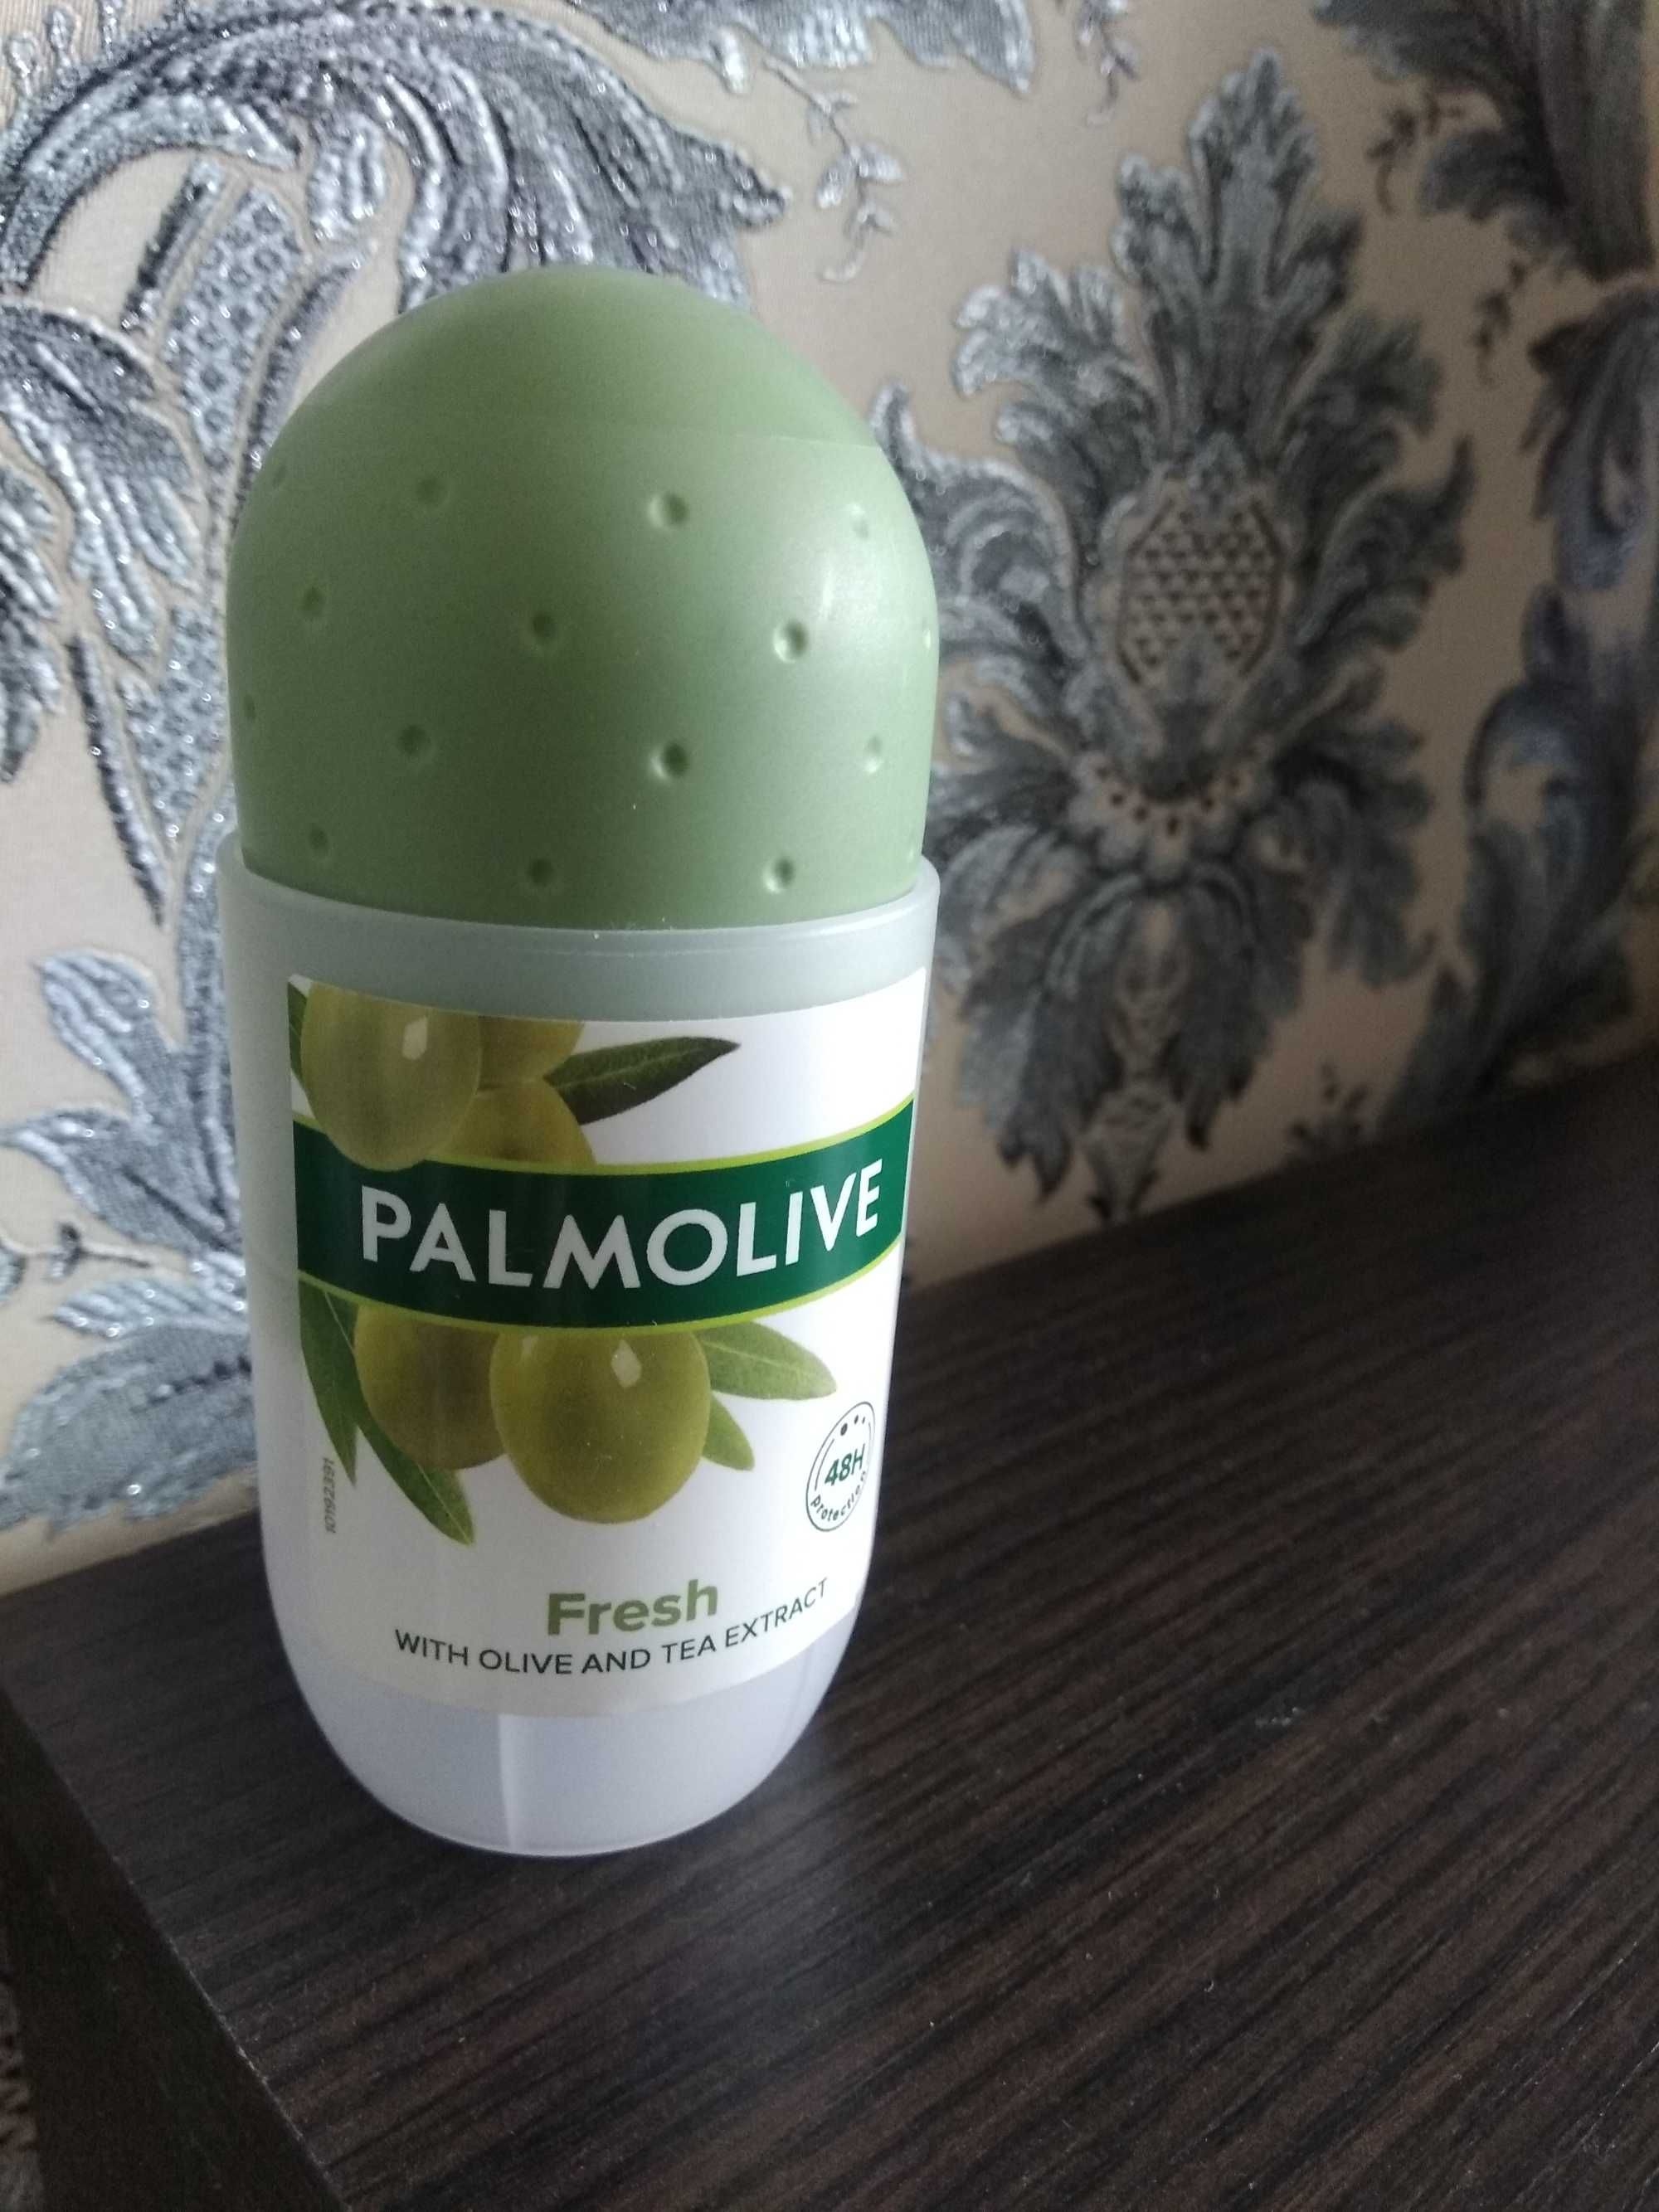 Женский дезодорант Palmolive Roll-on Fresh with Olive and Tea Extract